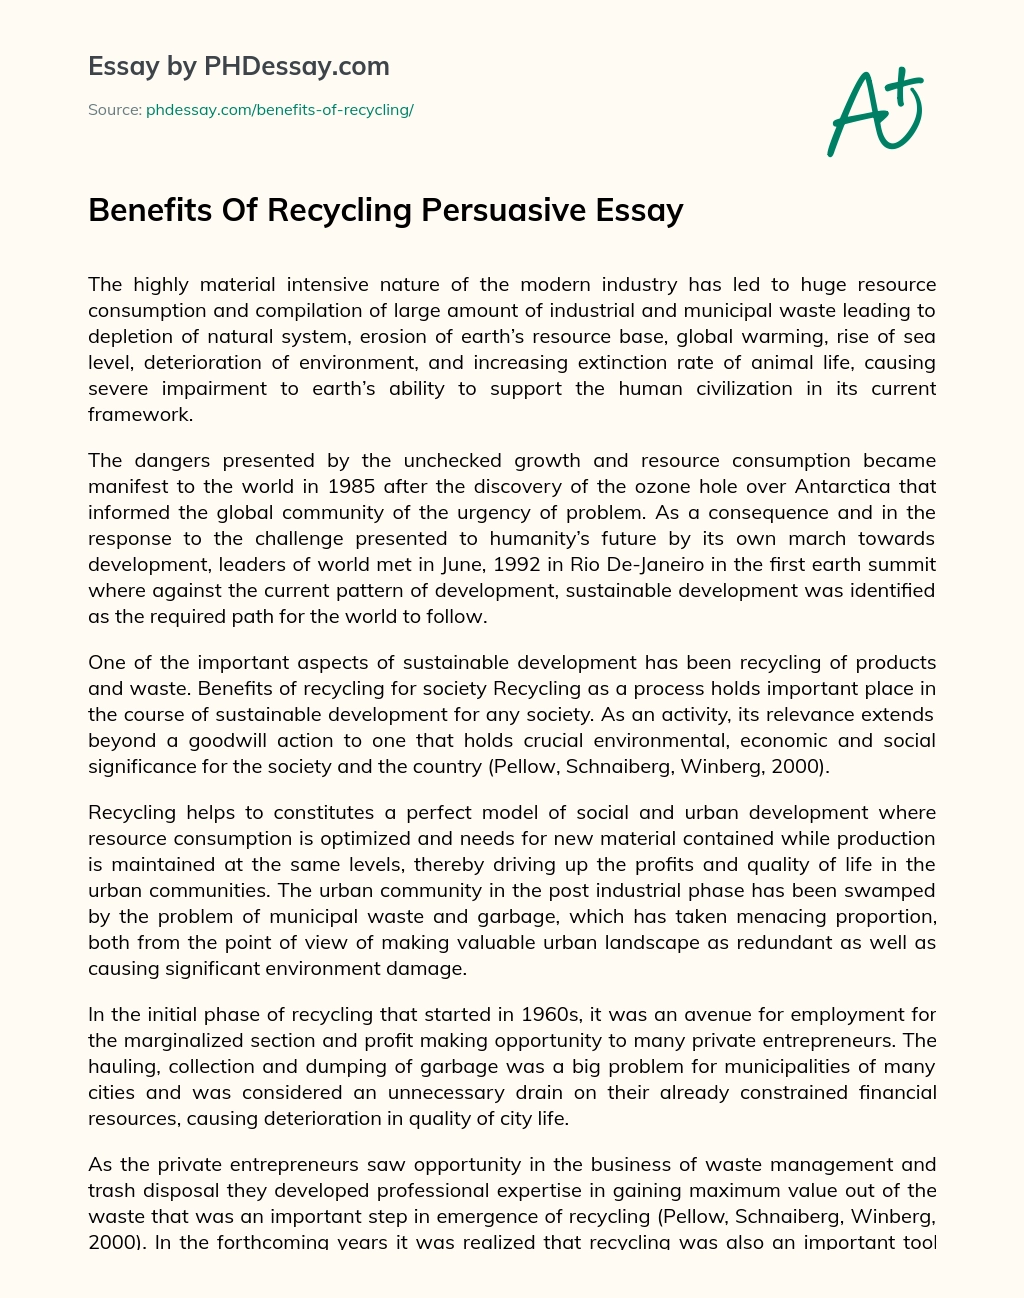 Benefits Of Recycling Persuasive Essay essay